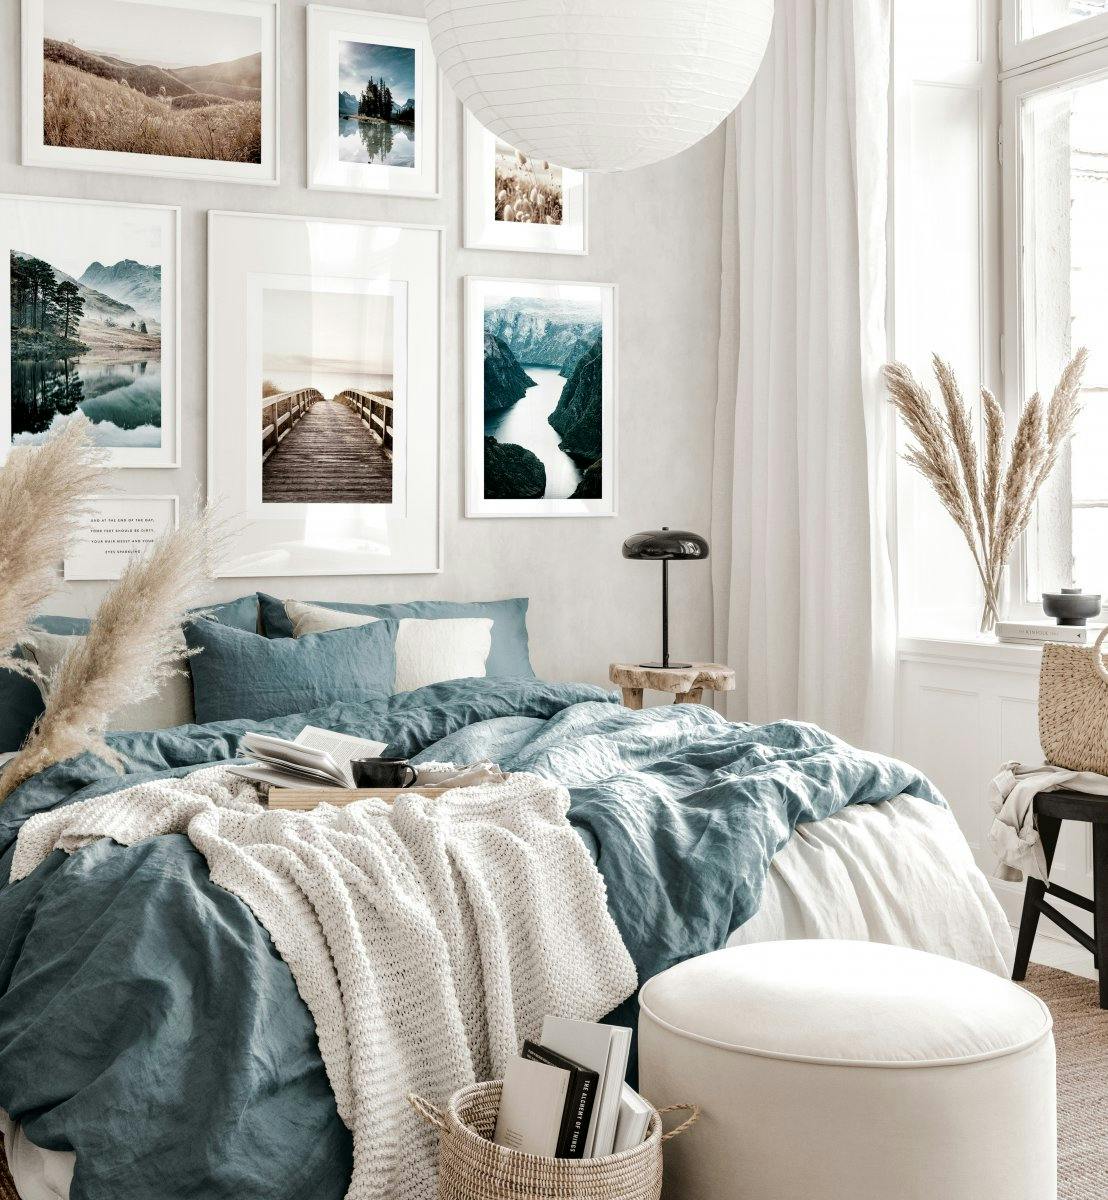 Mural de cuadros calmante dormitorio beige azul pósters de naturaleza marcos de madera blancos